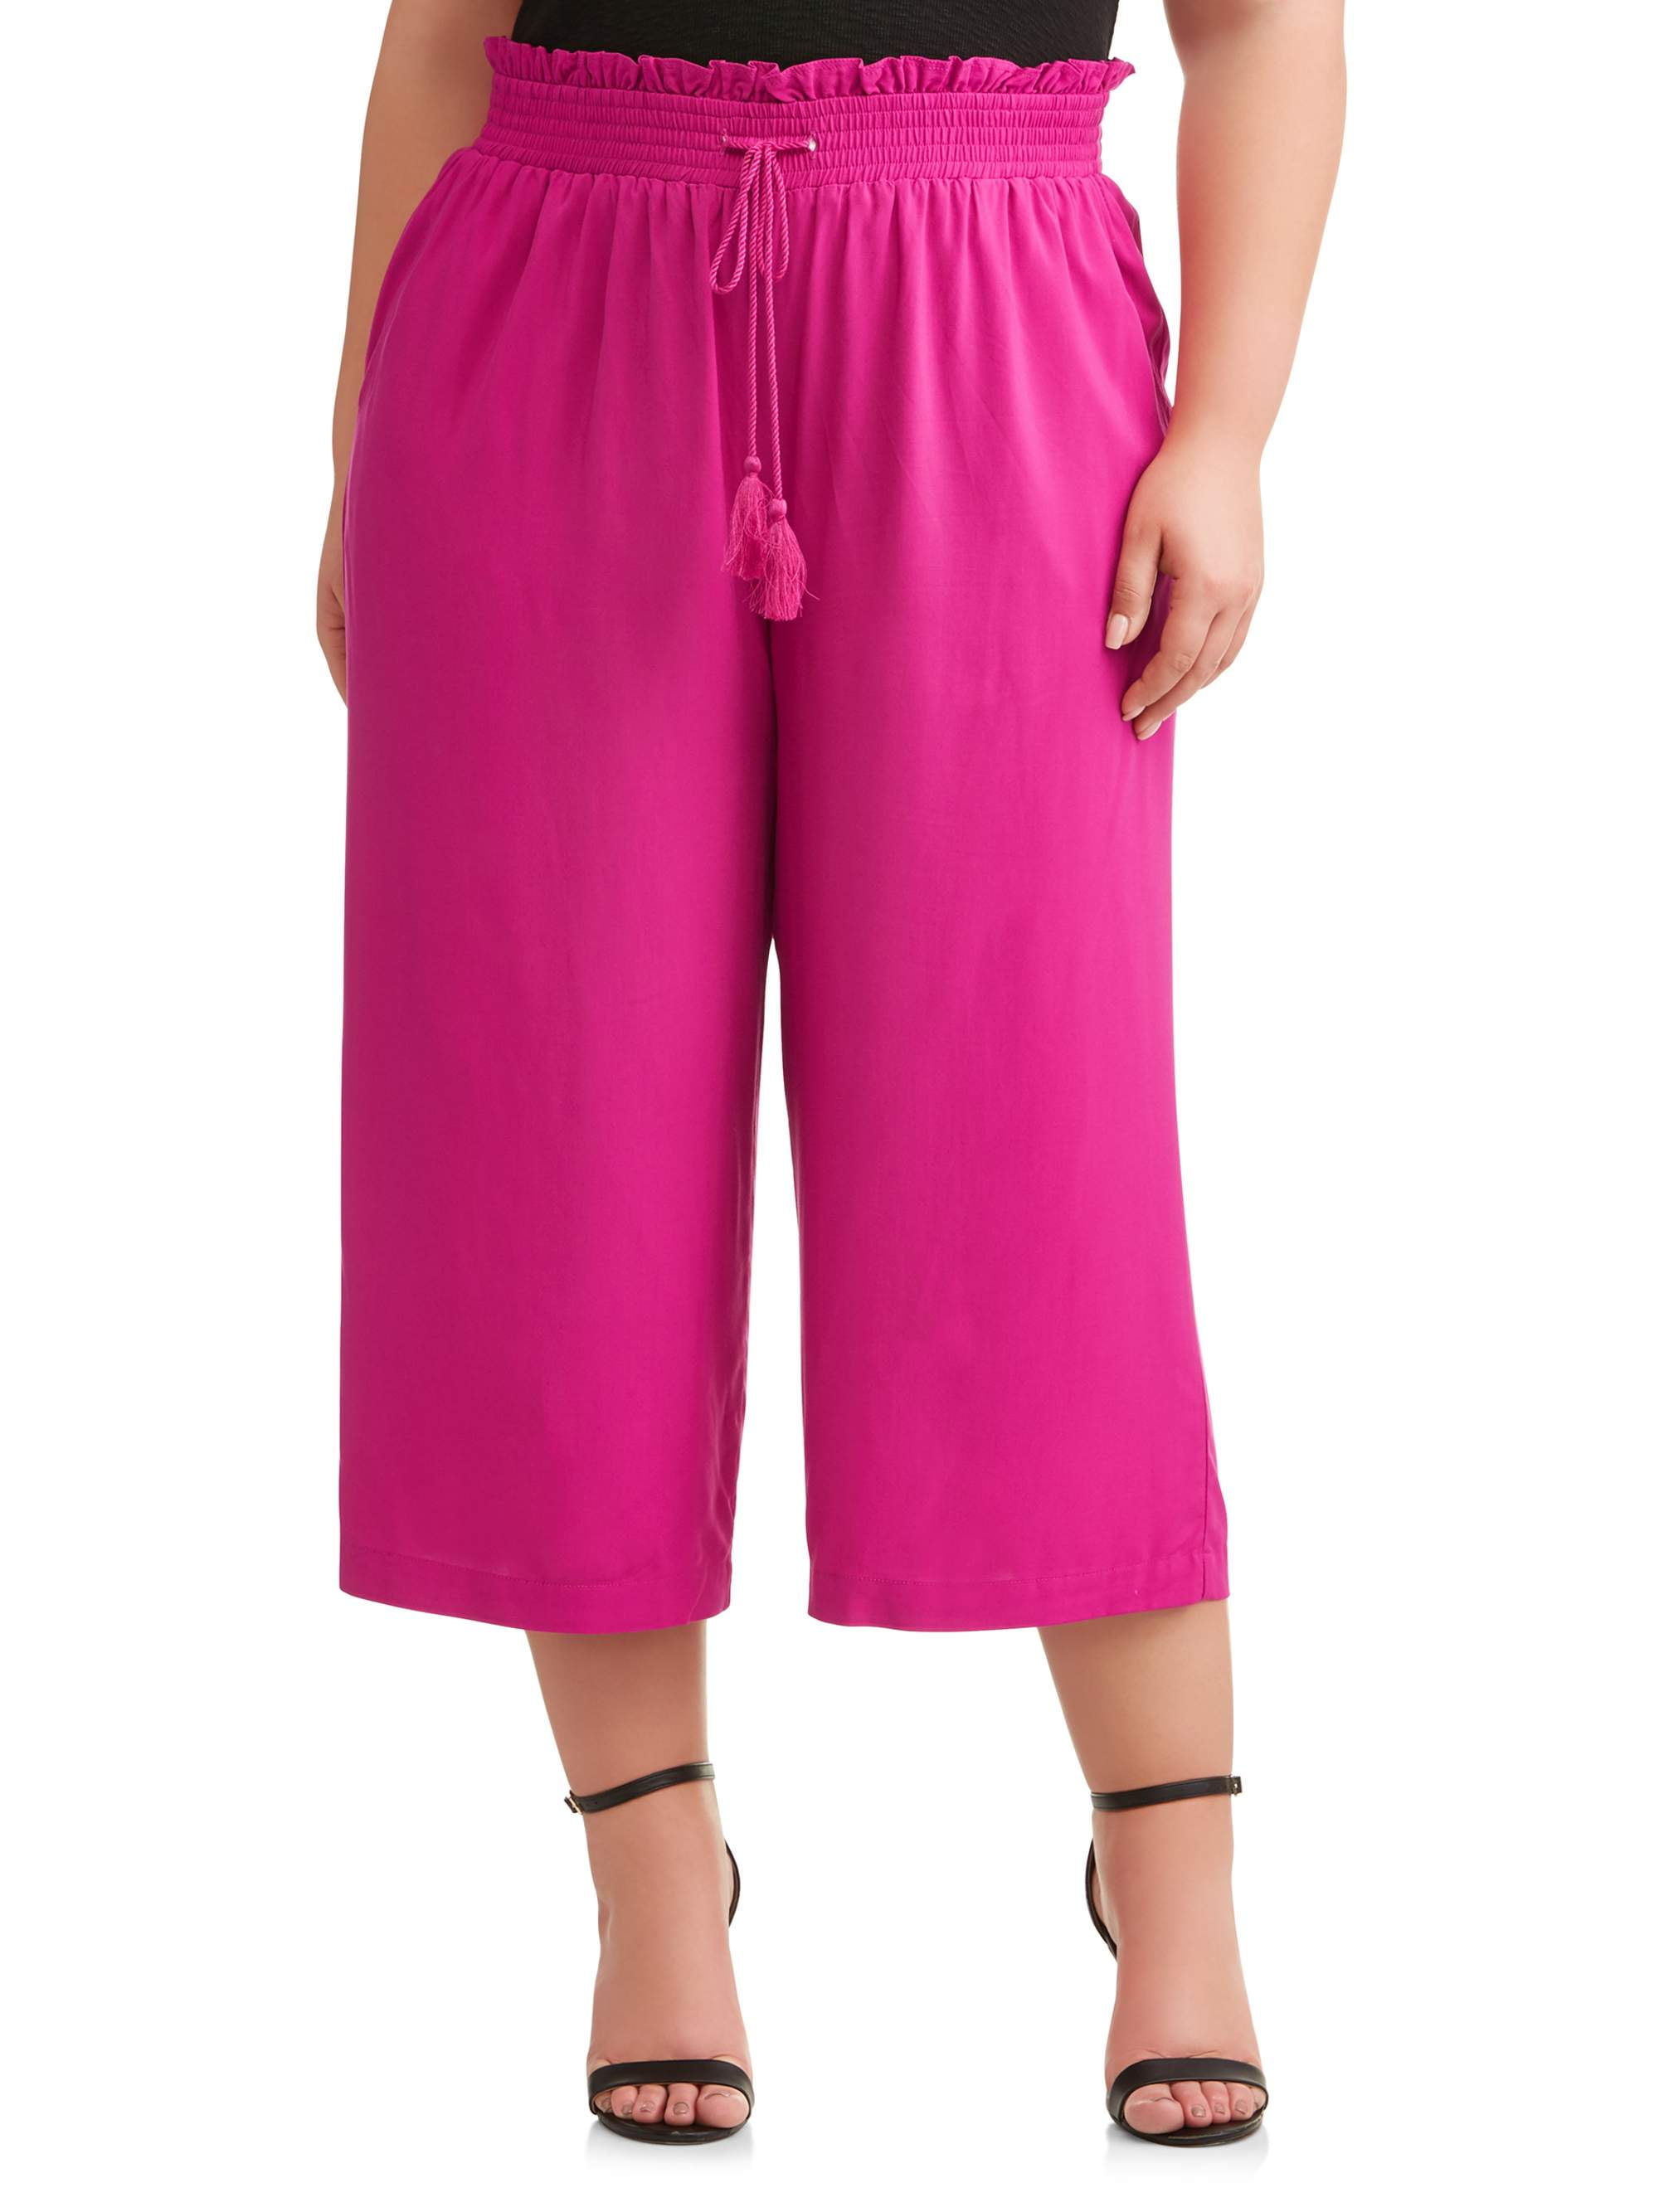 Shorts for Women Plus Size Comfortable Culottes Elastic Waist Wide Leg Pocket Casual Shorts Loose Fit Short Pants Ulanda